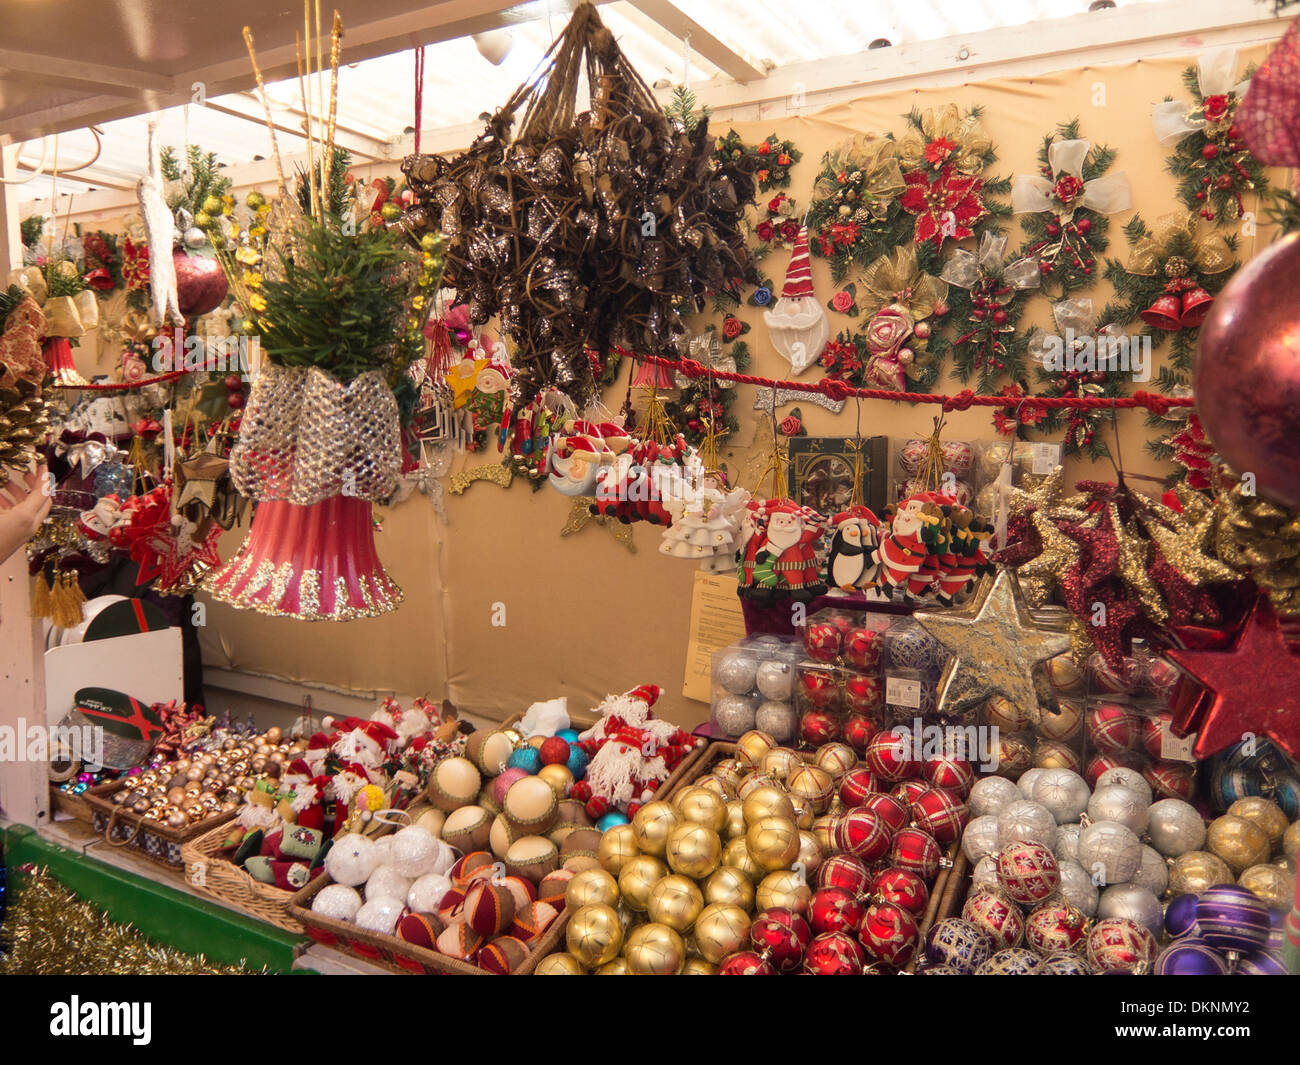 Europe, Spain, Barcelona, Christmas, Christmas balls, trimmings, ornamentation. Stock Photo